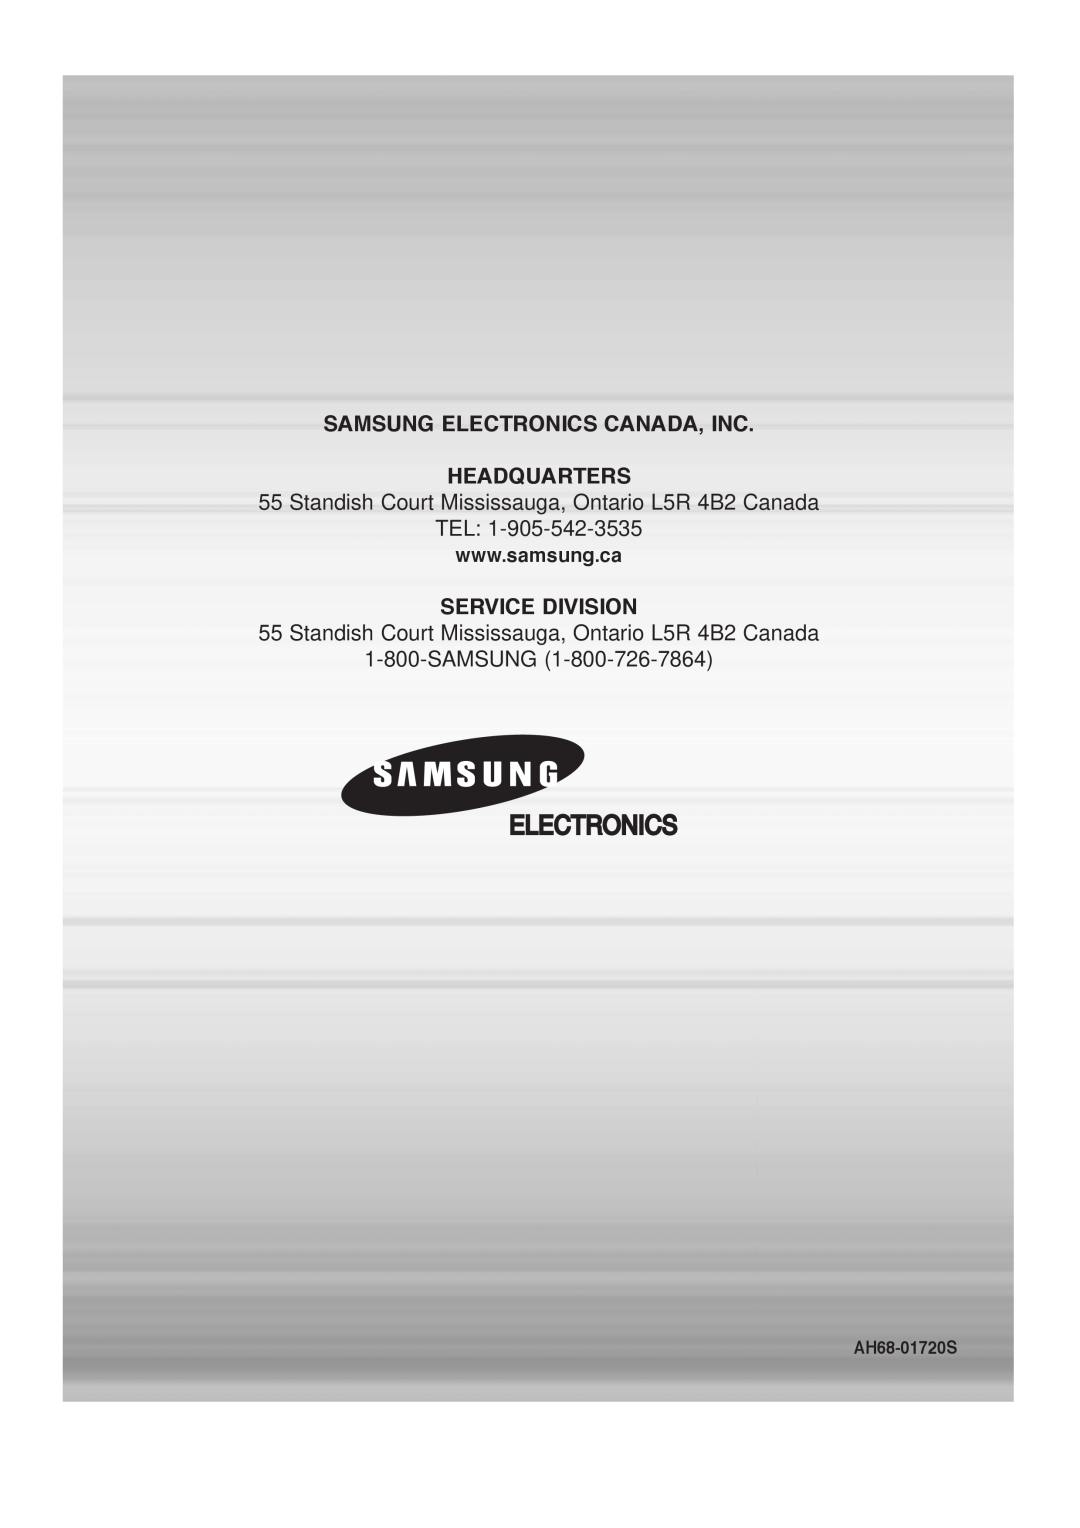 Samsung P1200-SECA, SDSM-EX manual Samsung Electronics Canada, Inc Headquarters, Tel, Service Division, AH68-01720S 